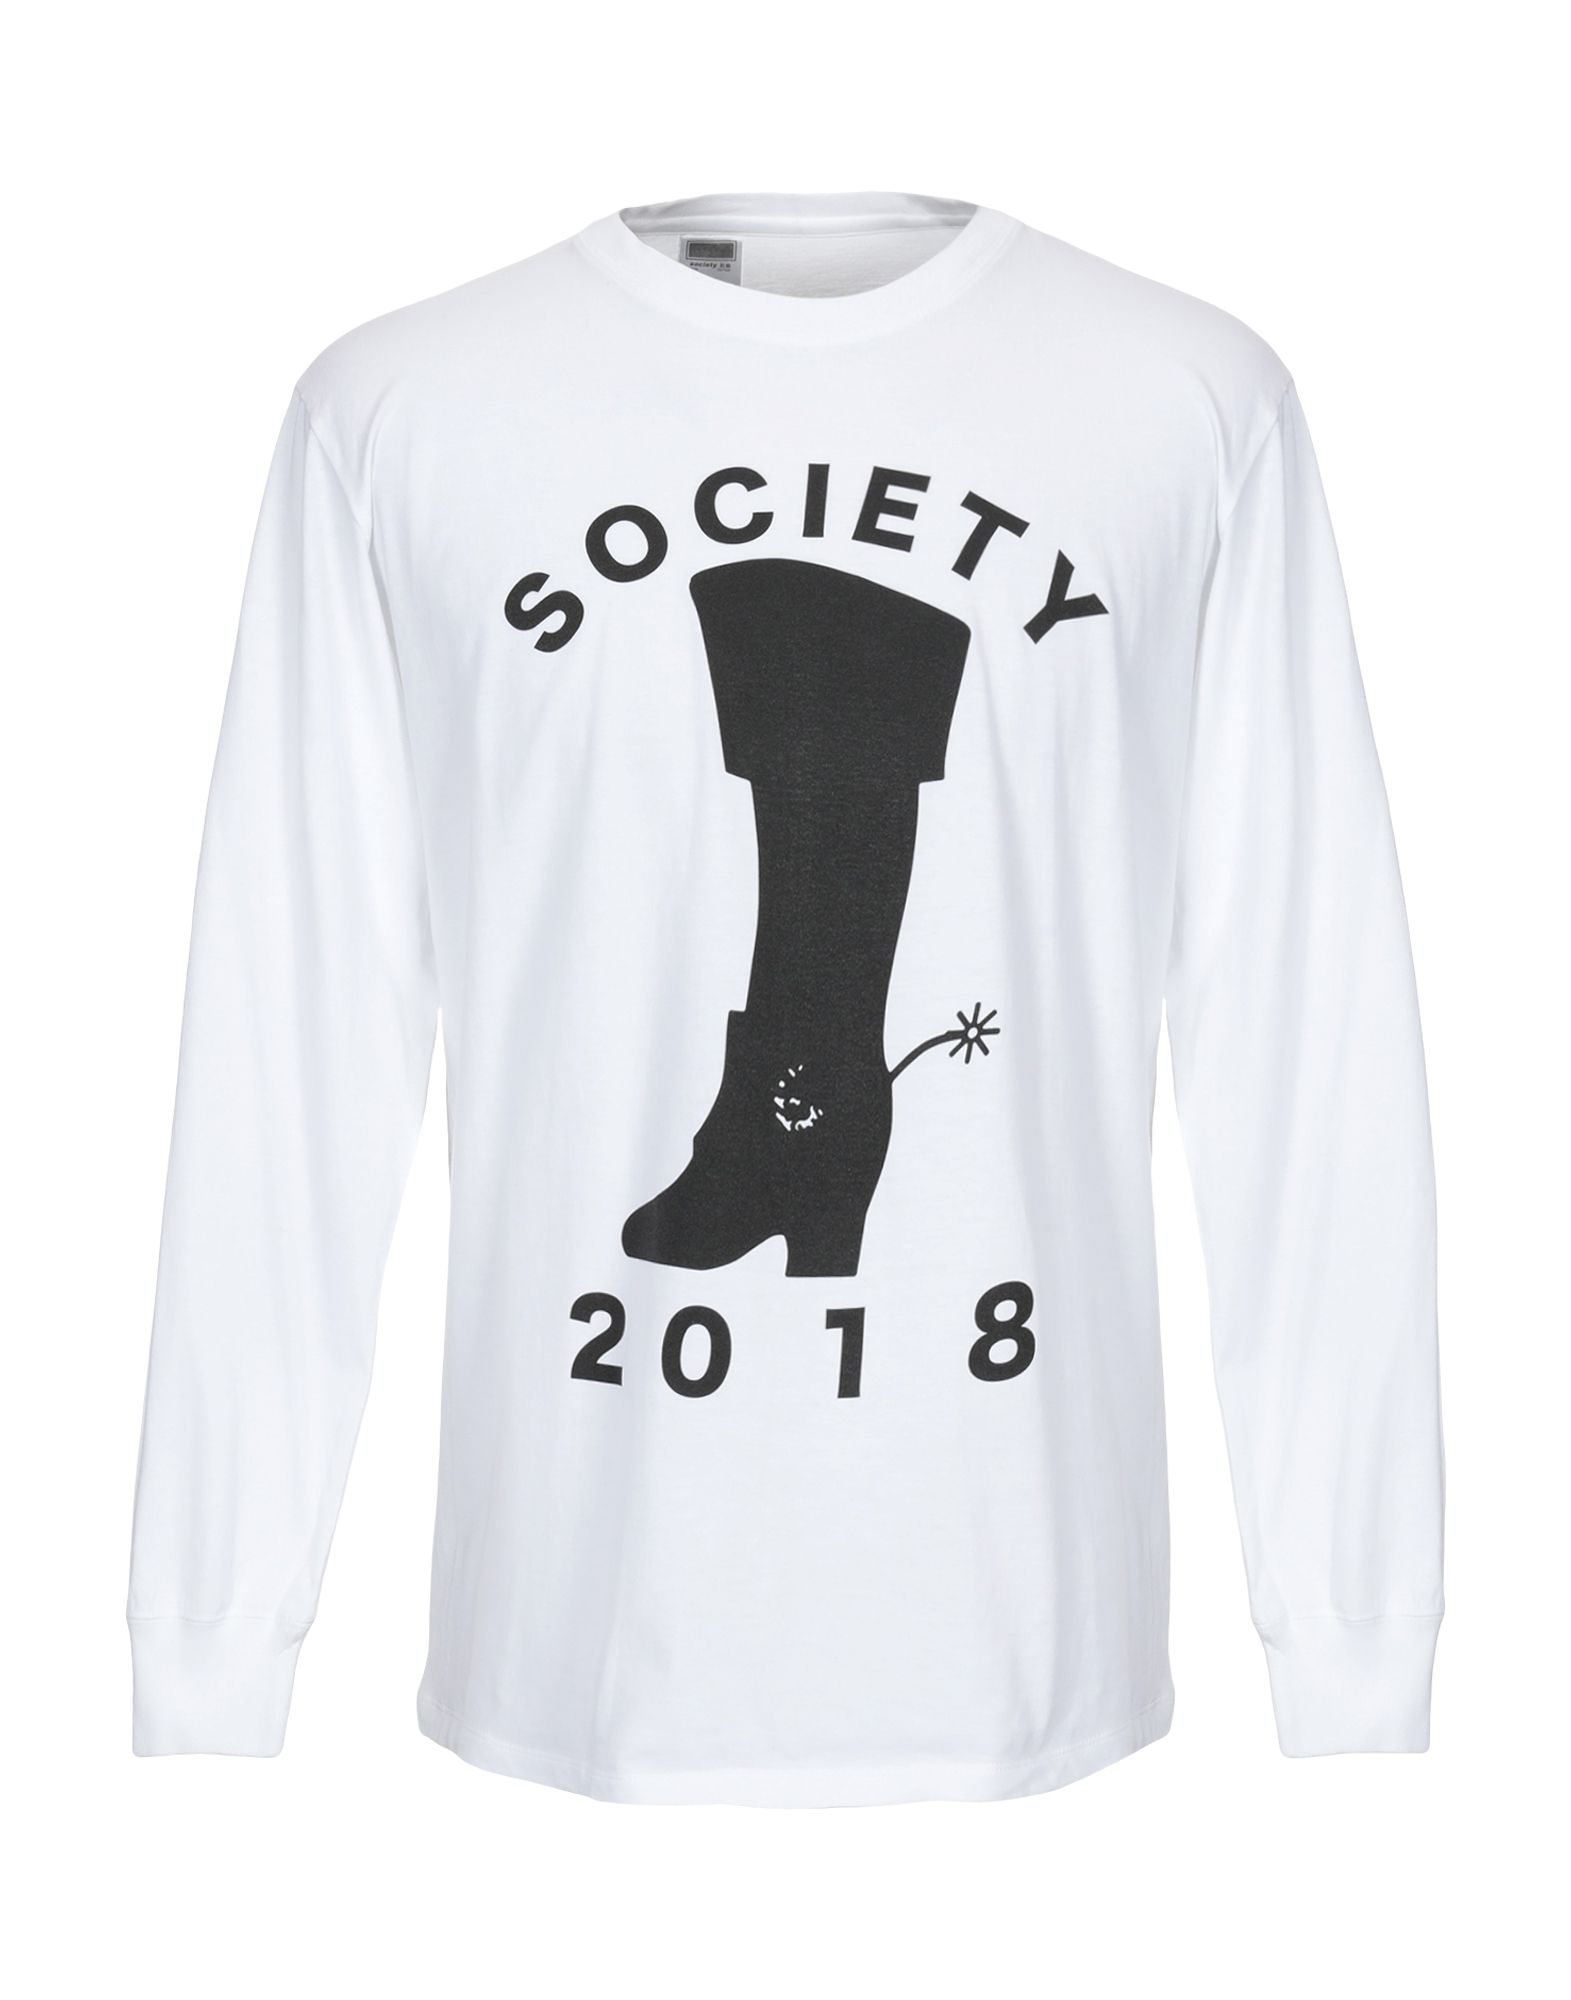 Society купить. Society одежда.